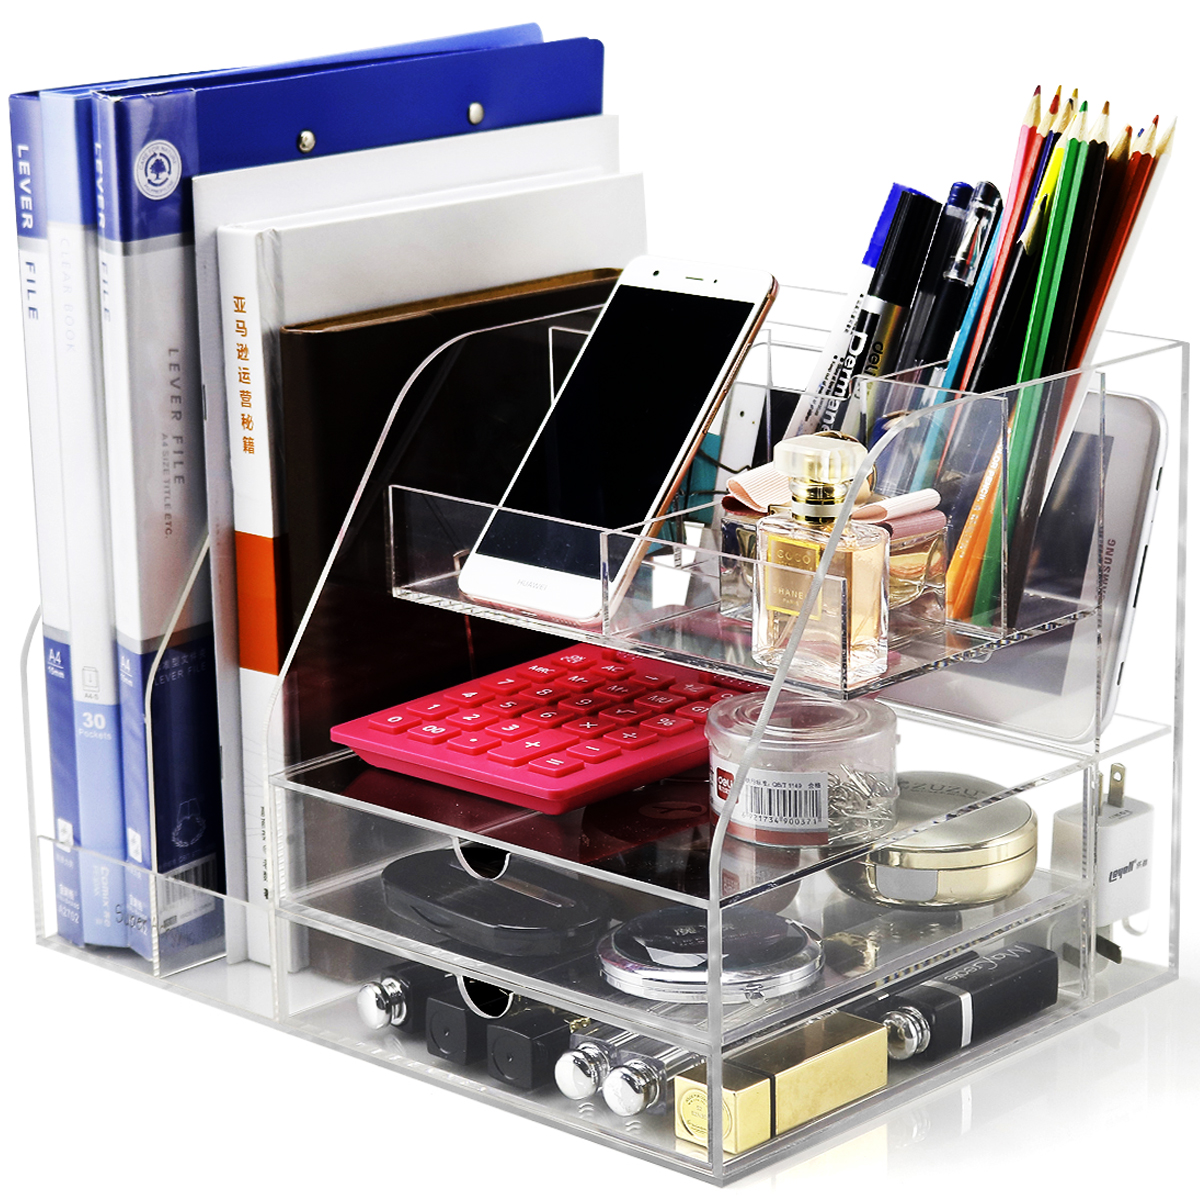 NewCrea Desk Organizers,Multi-Functional Pencil Holder To Tidy Your Desktop,Acrylic,Clear